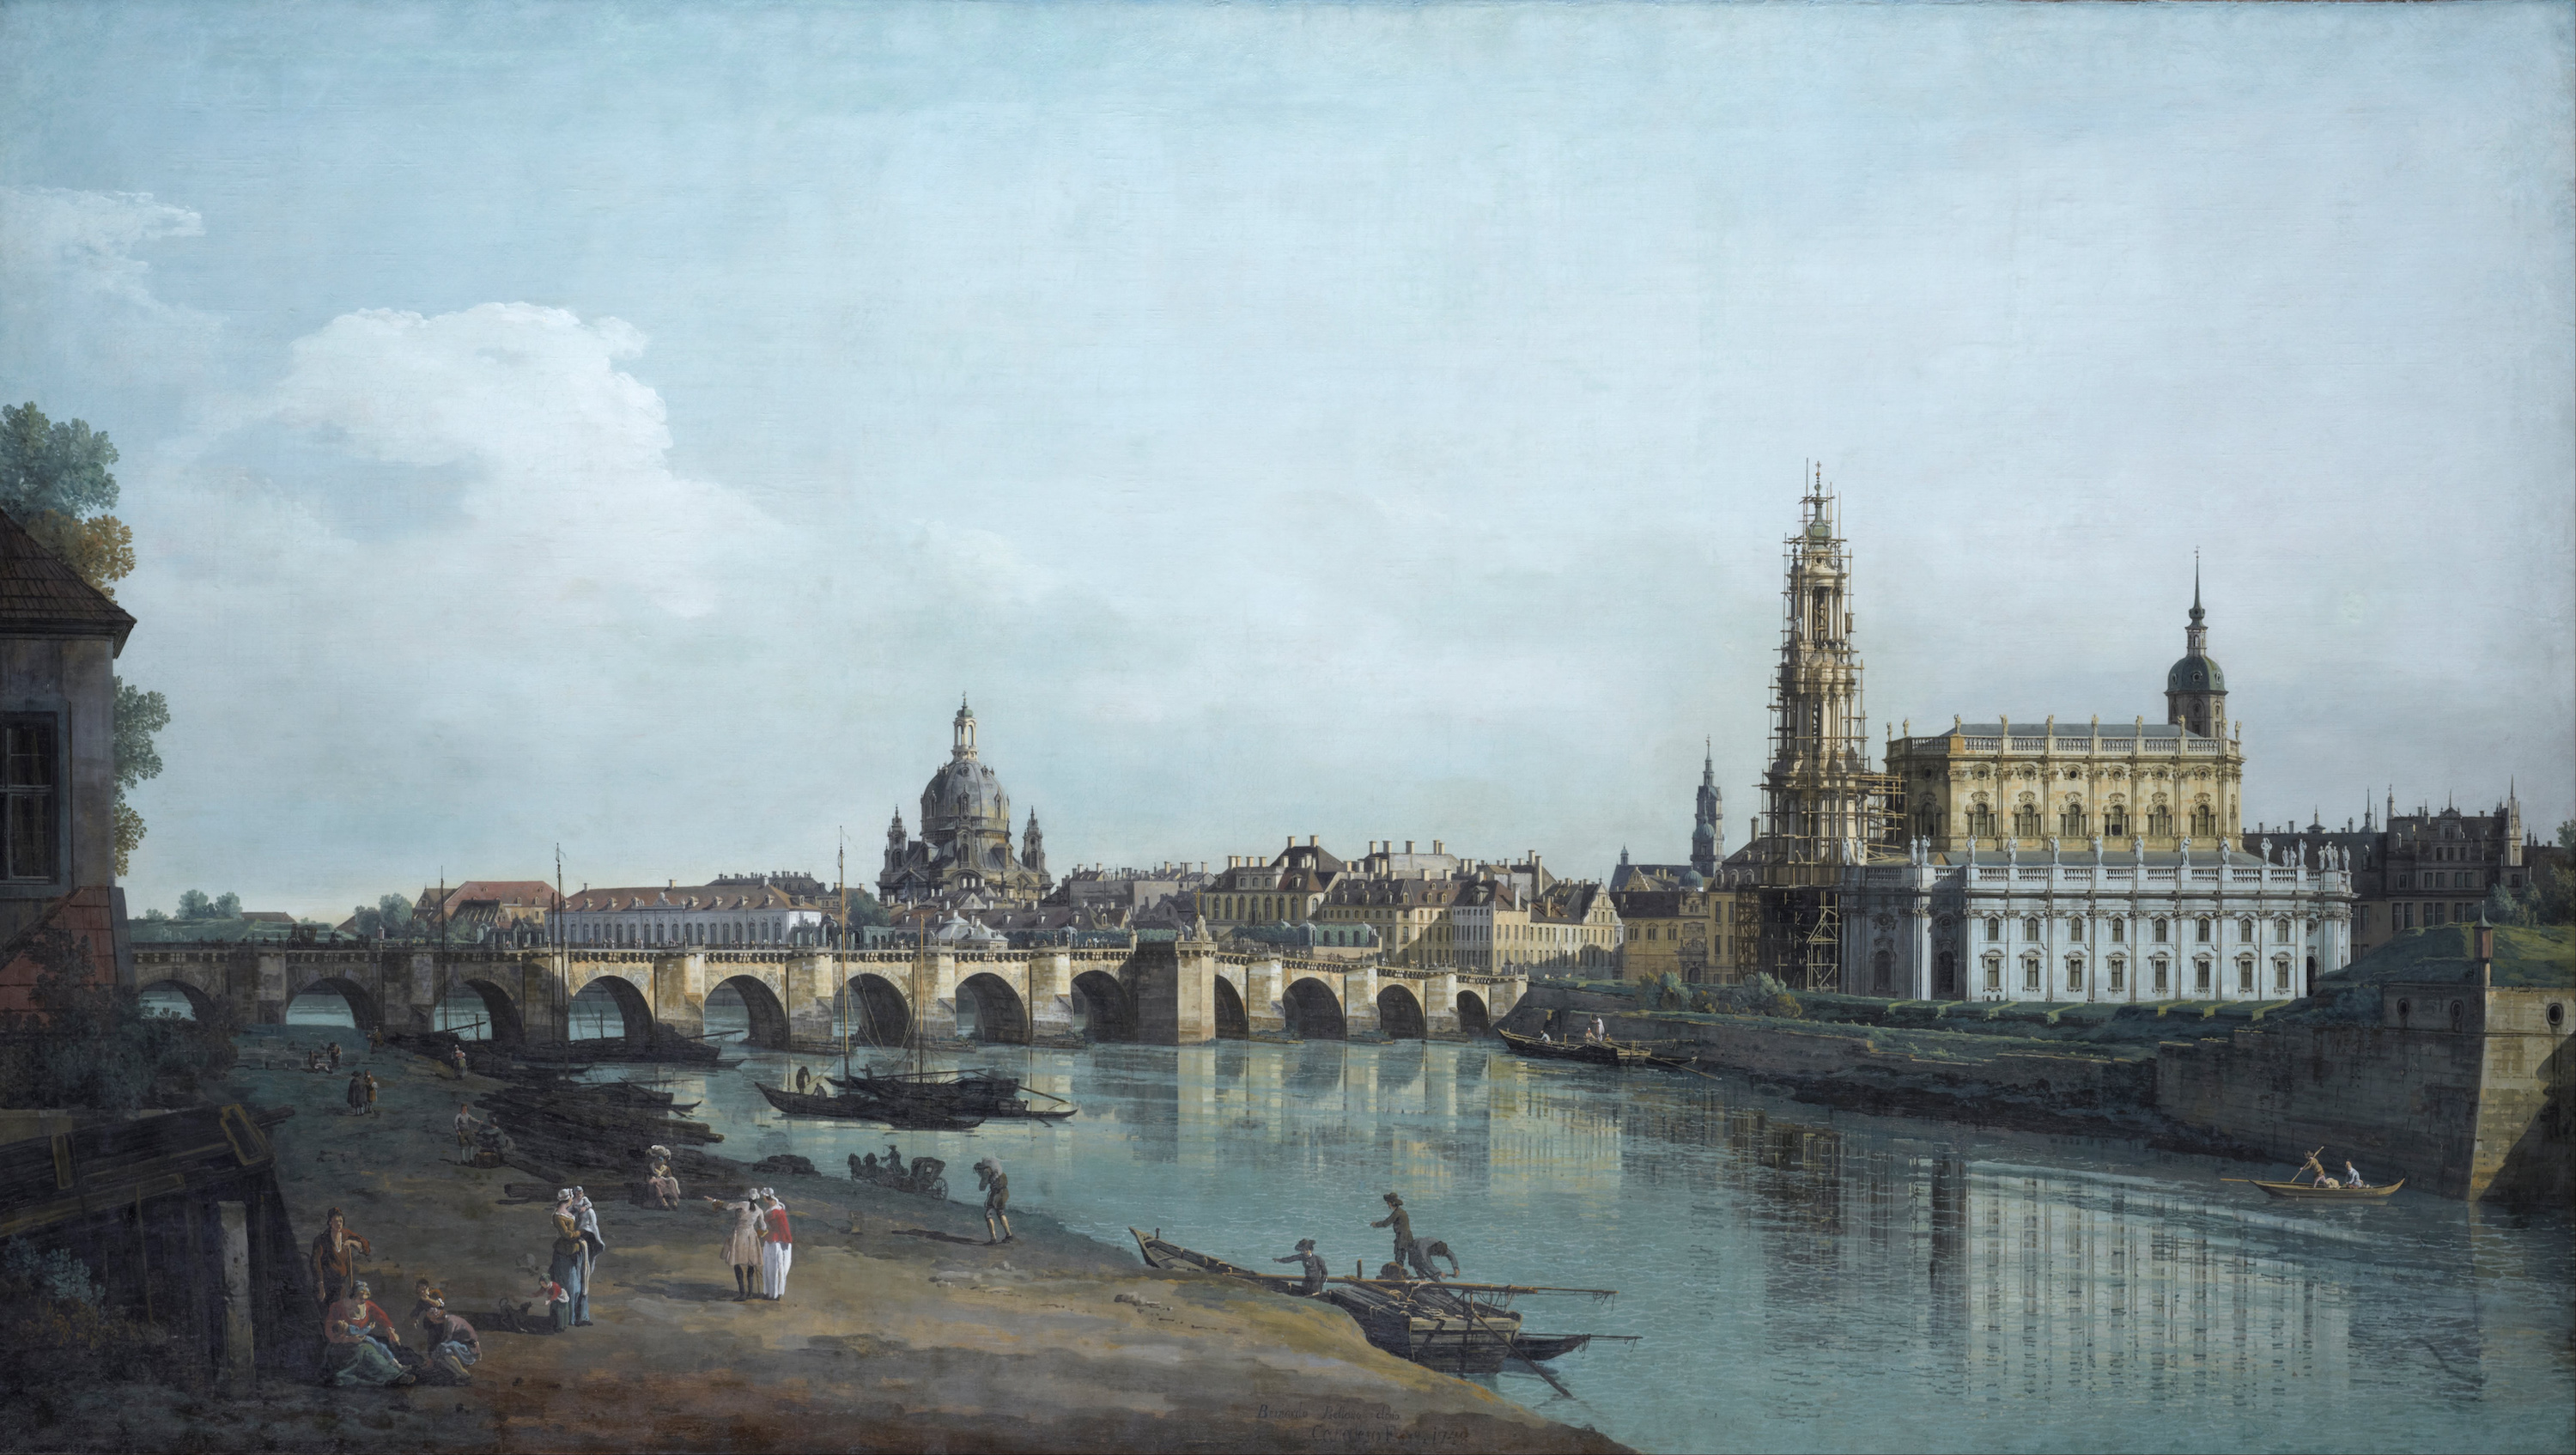 Dresden seen from the Right Bank of the Elbe, beneath the Augustus Bridge by Bernardo Bellotto (Canaletto) - 1748 - 1.33 x 2.37 m Staatliche Kunstsammlungen Dresden